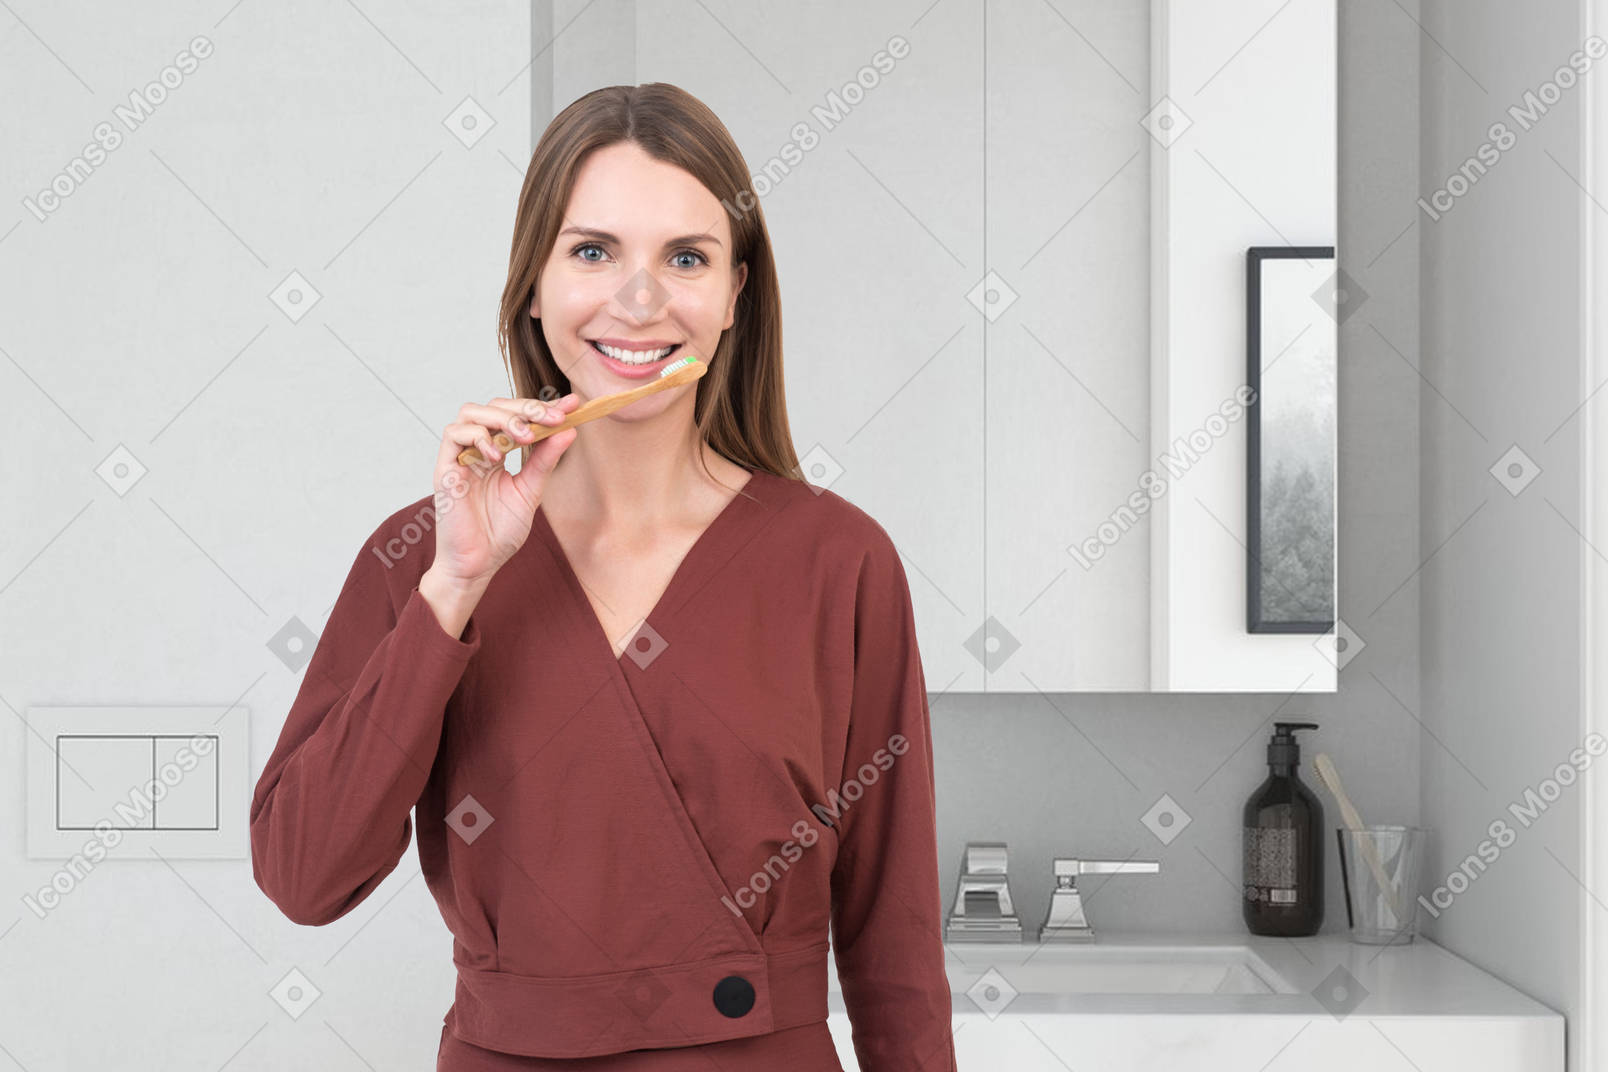 A woman brushing her teeth in a bathroom